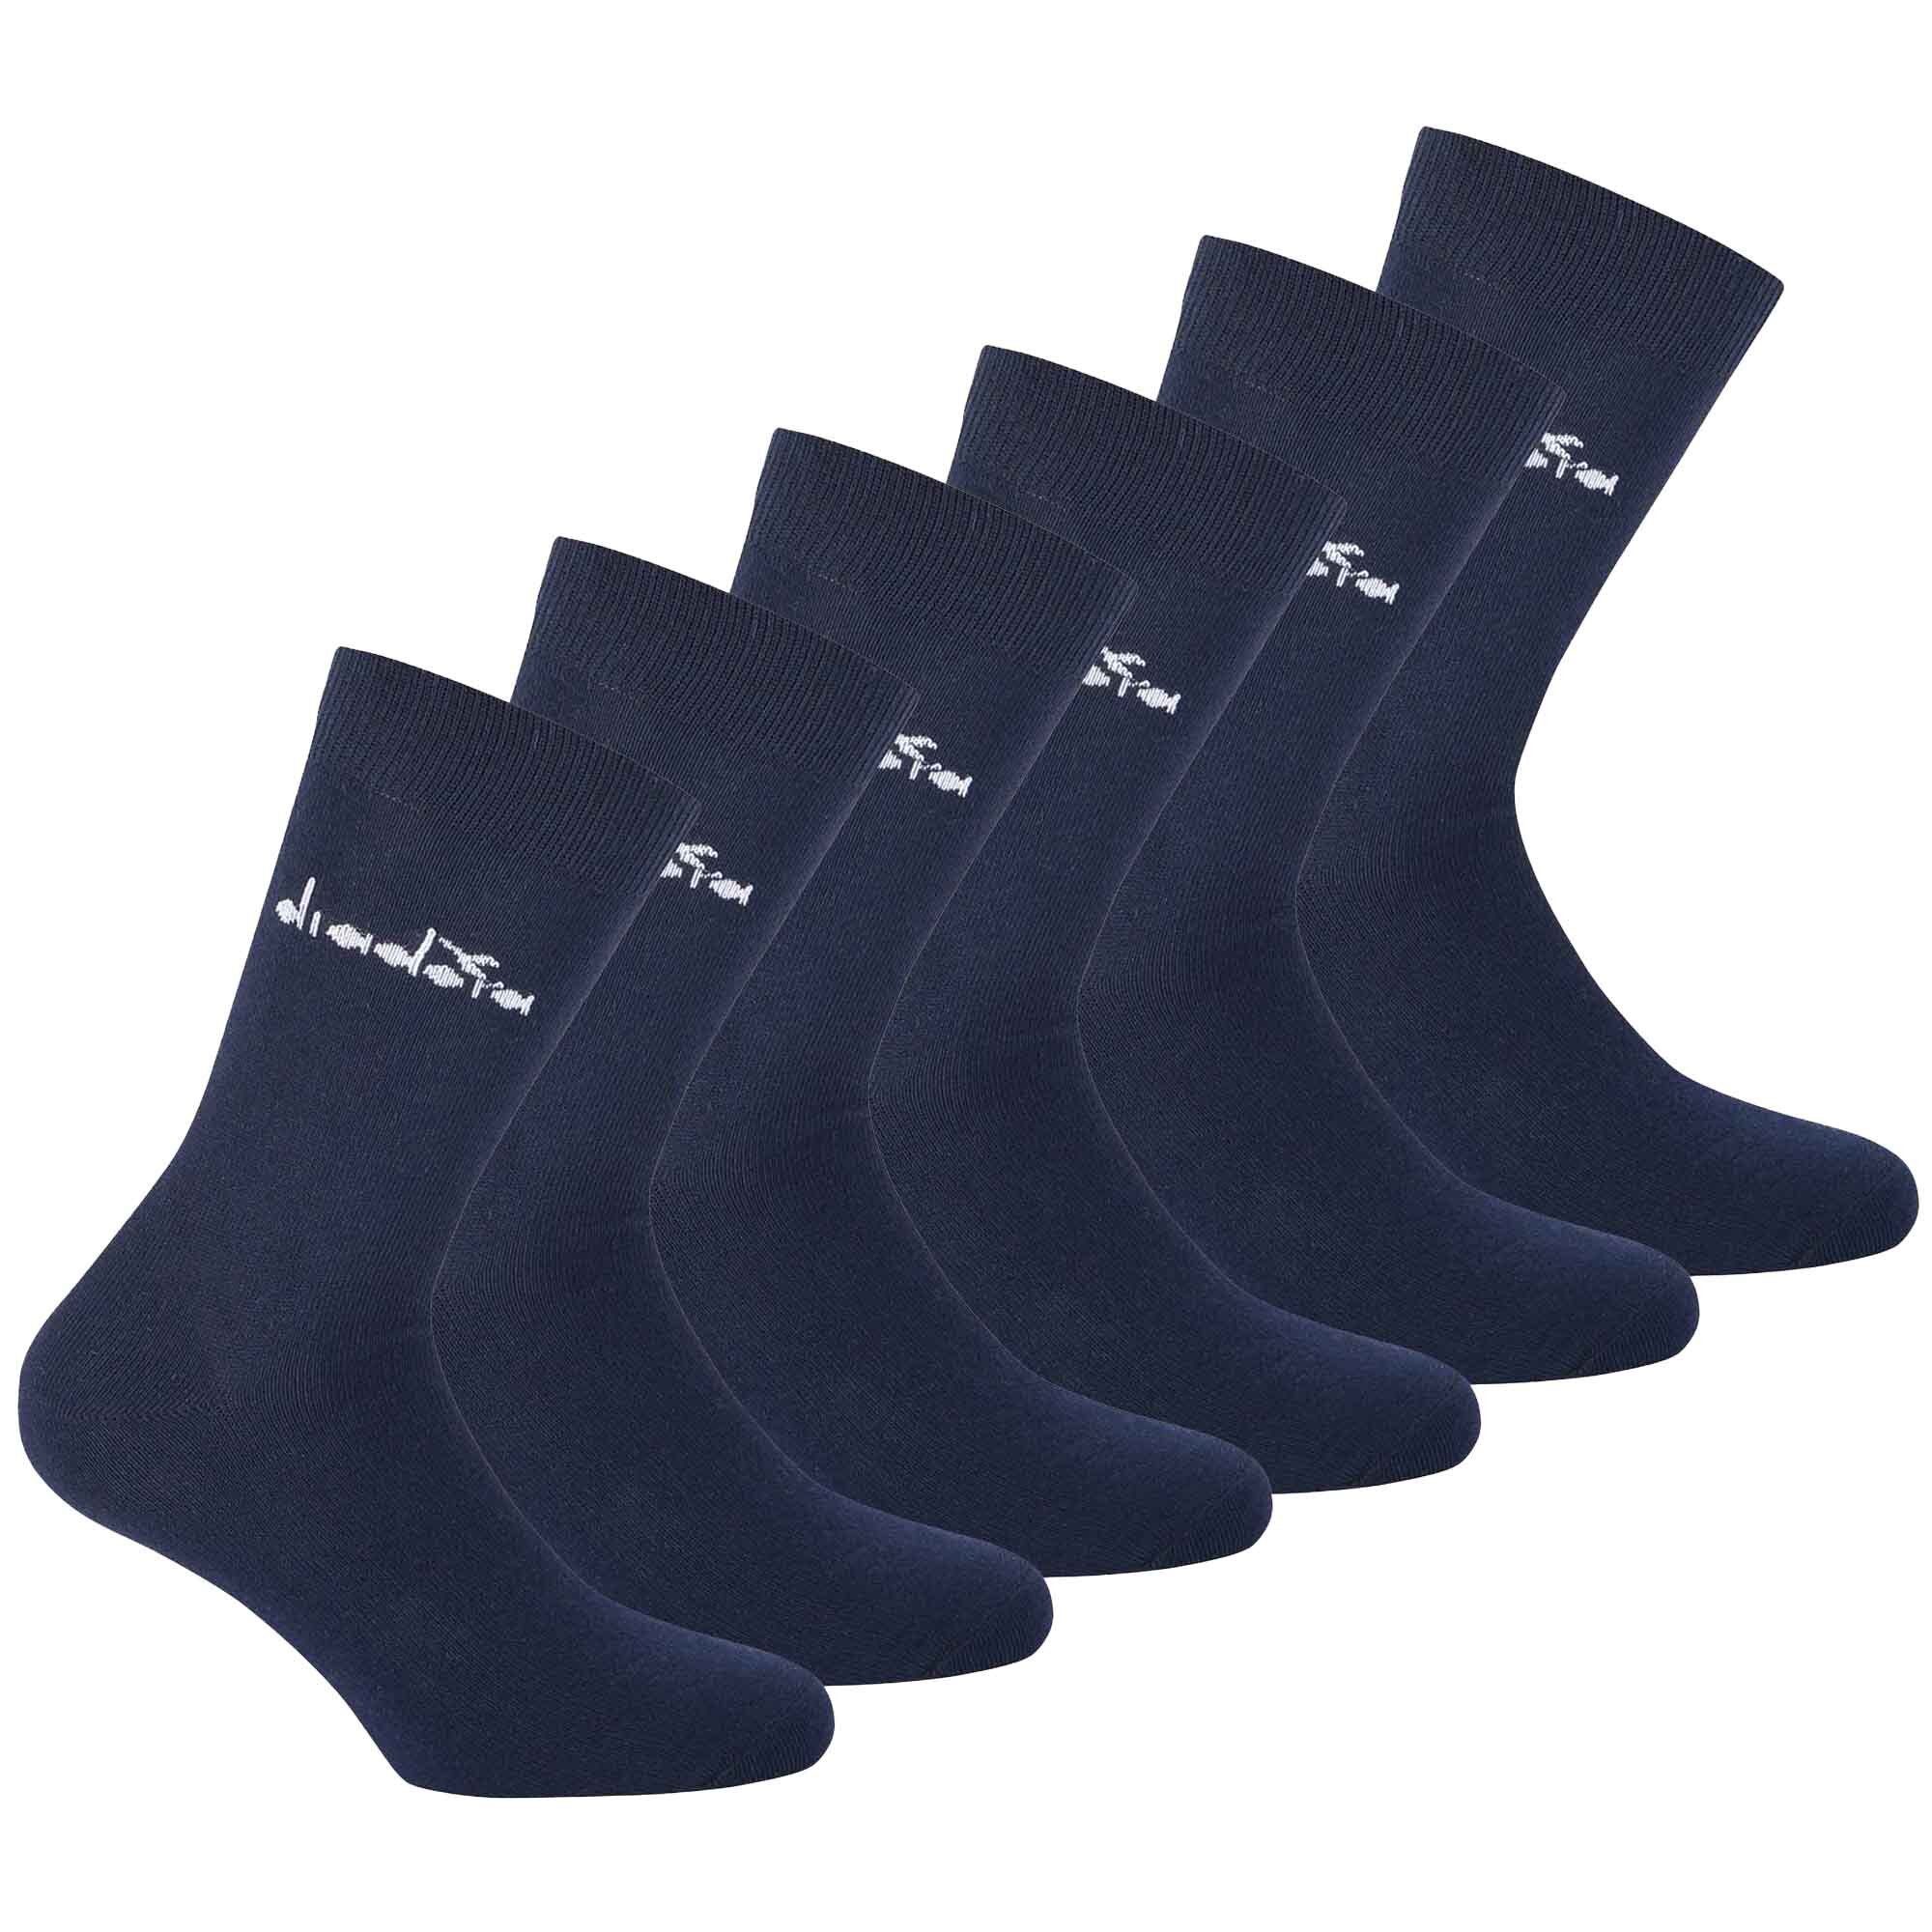 Diadora Sportsocken Unisex Socken, 6er Pack - Sportsocken, Baumwolle Dunkelblau